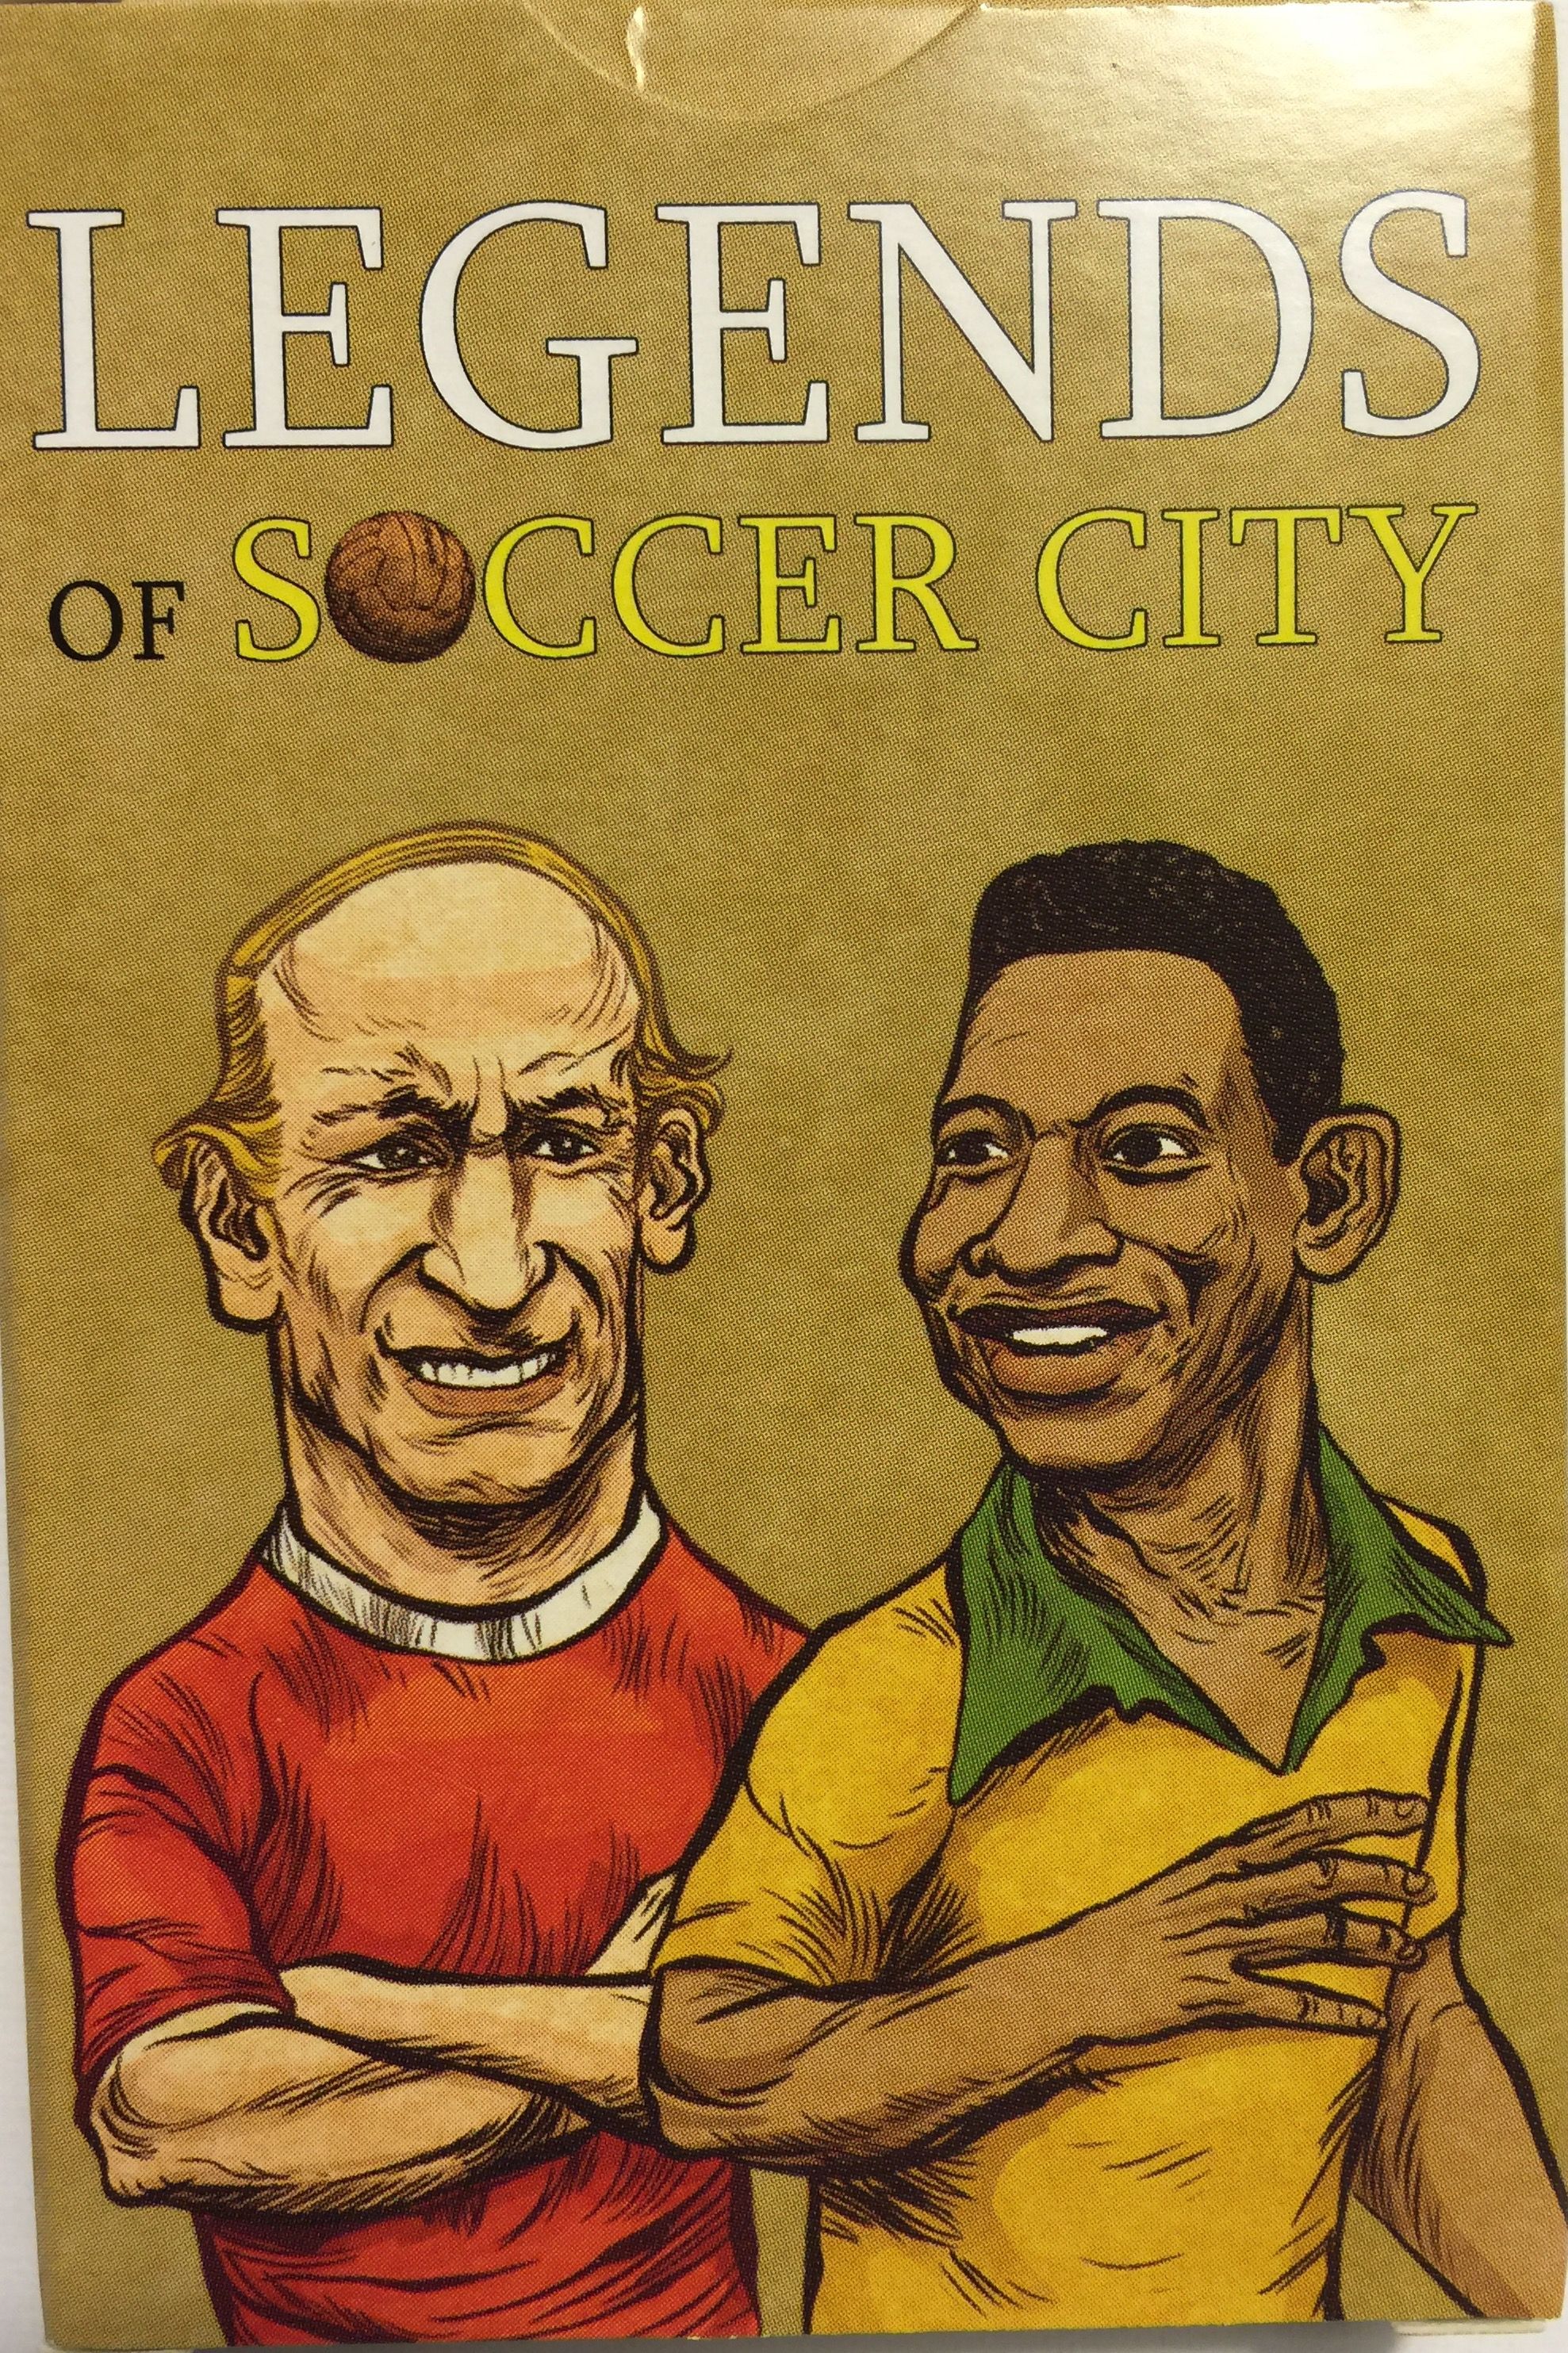 Soccer City: Legends of Soccer City